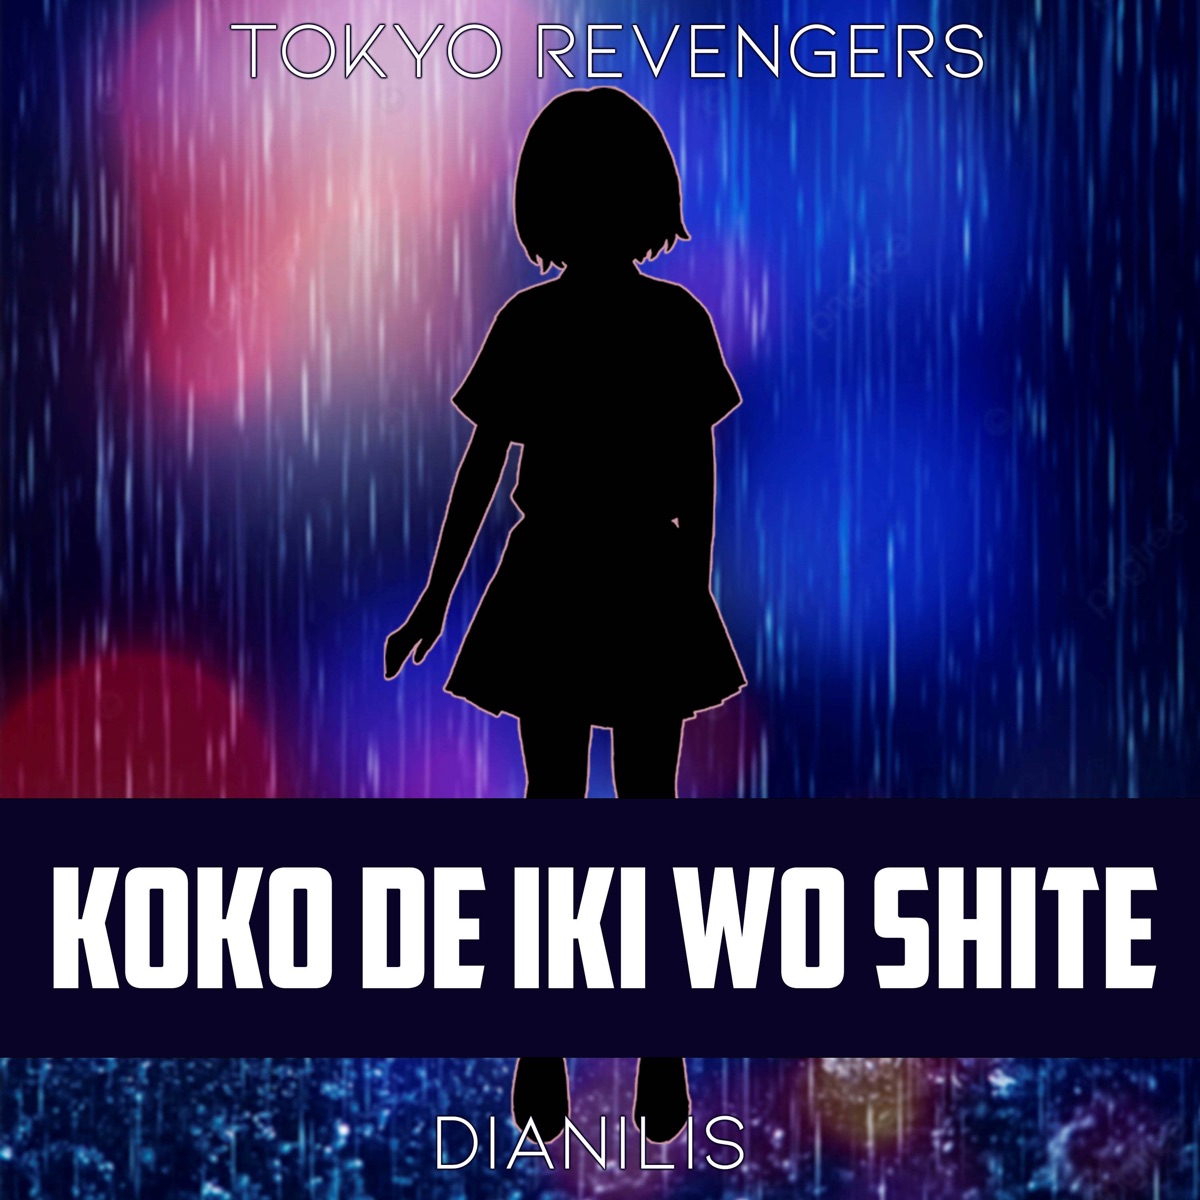 Monochrome City (From Koi to Yobu Ni Wa Kimochi Warui - Koikimo) [Cover]  - Single - Album by Dianilis - Apple Music